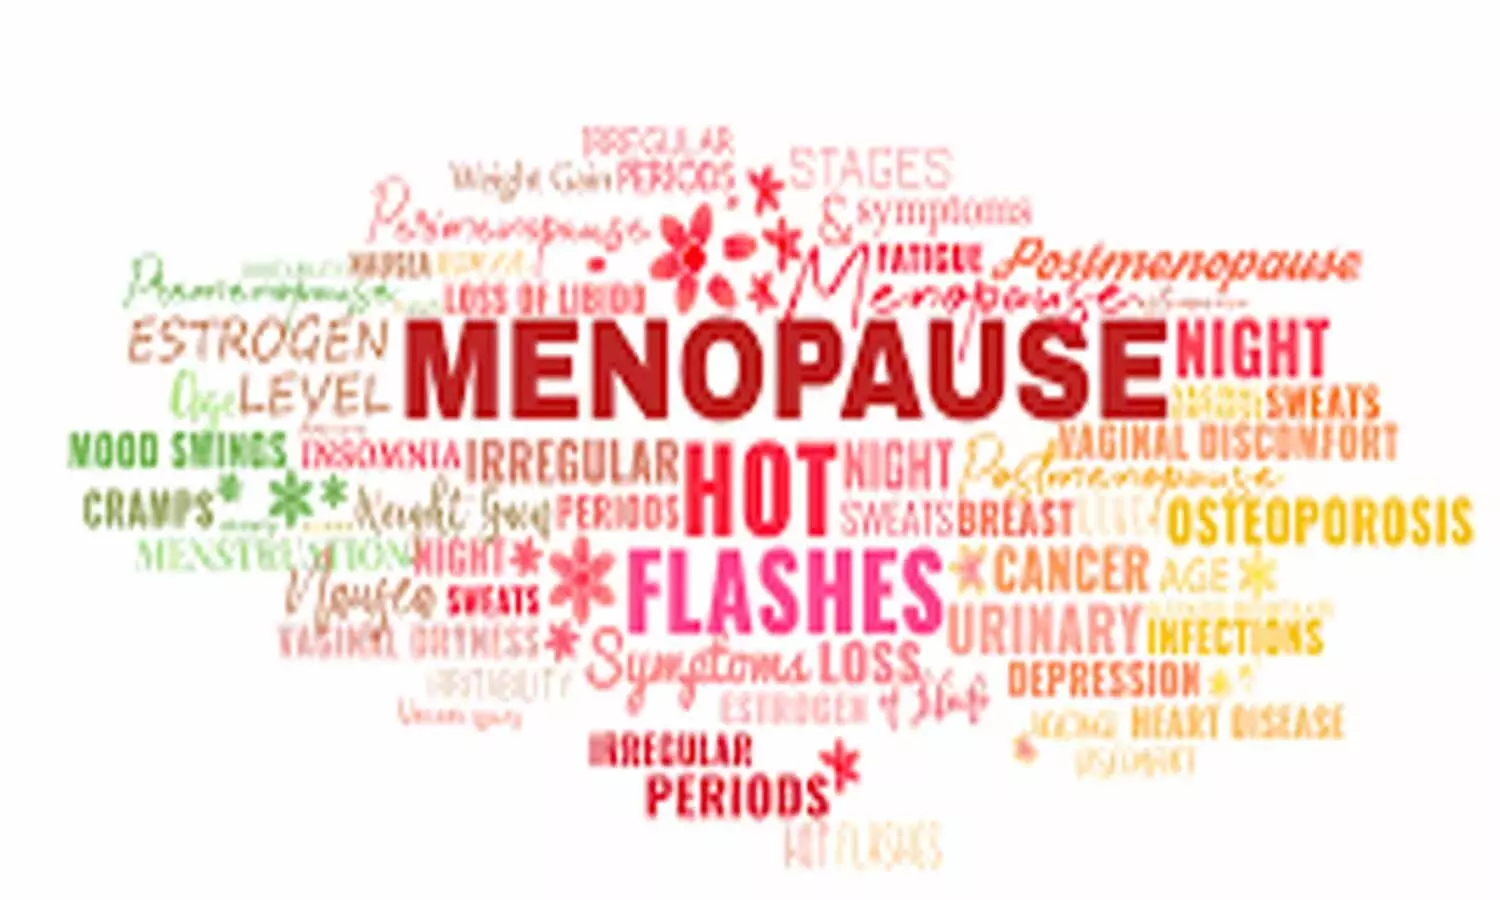 Severe menopause symptoms often accompany premature ovarian insufficiency